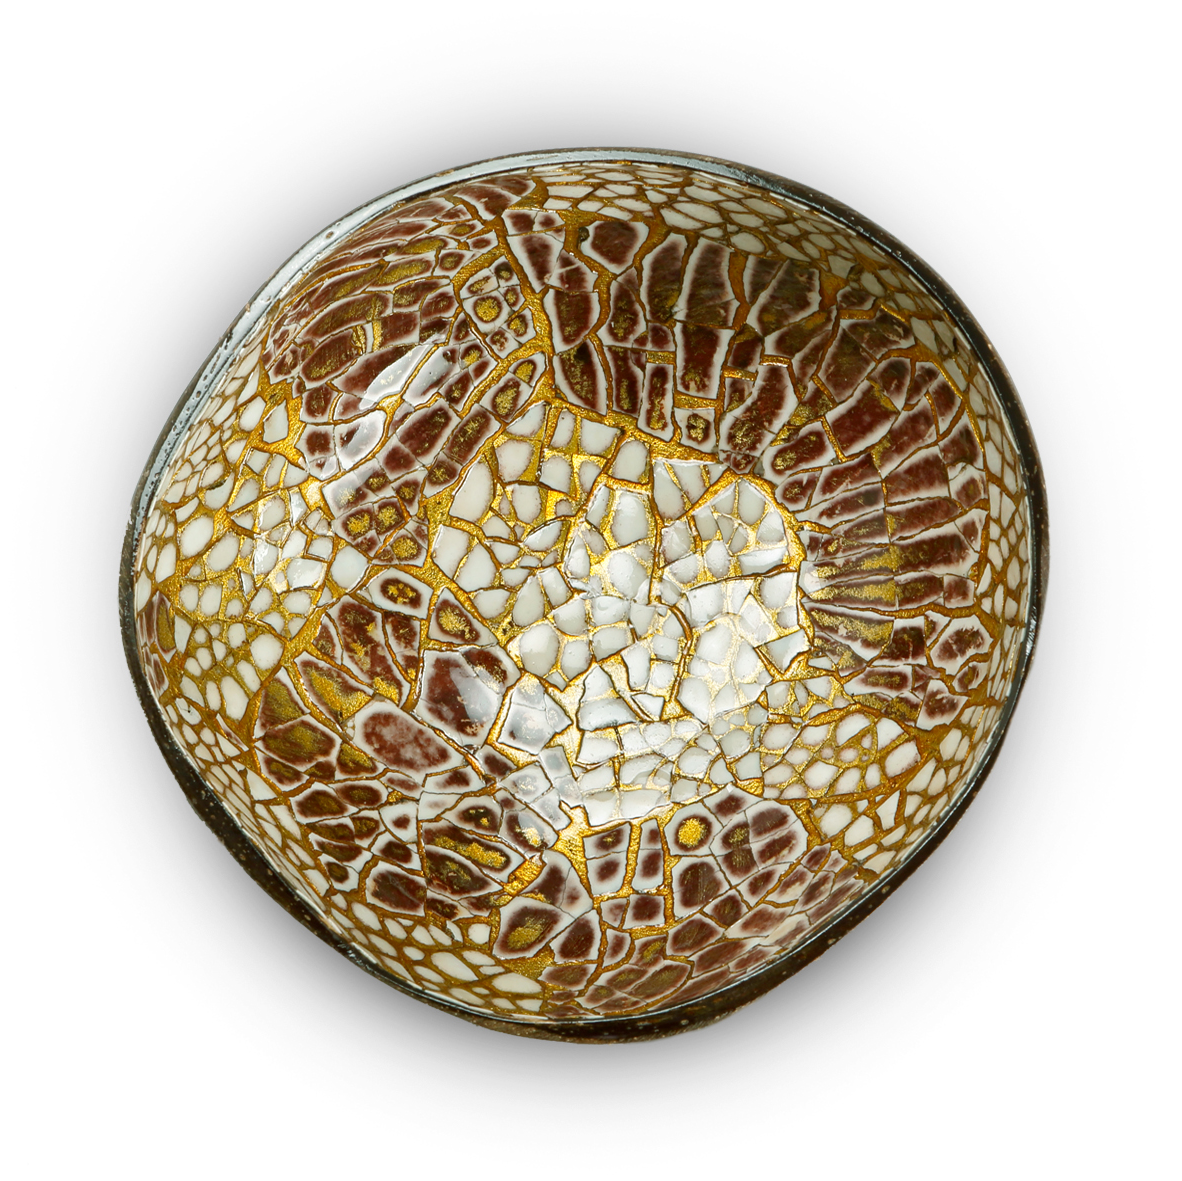 Coconut Bowl - Gold Eggshell